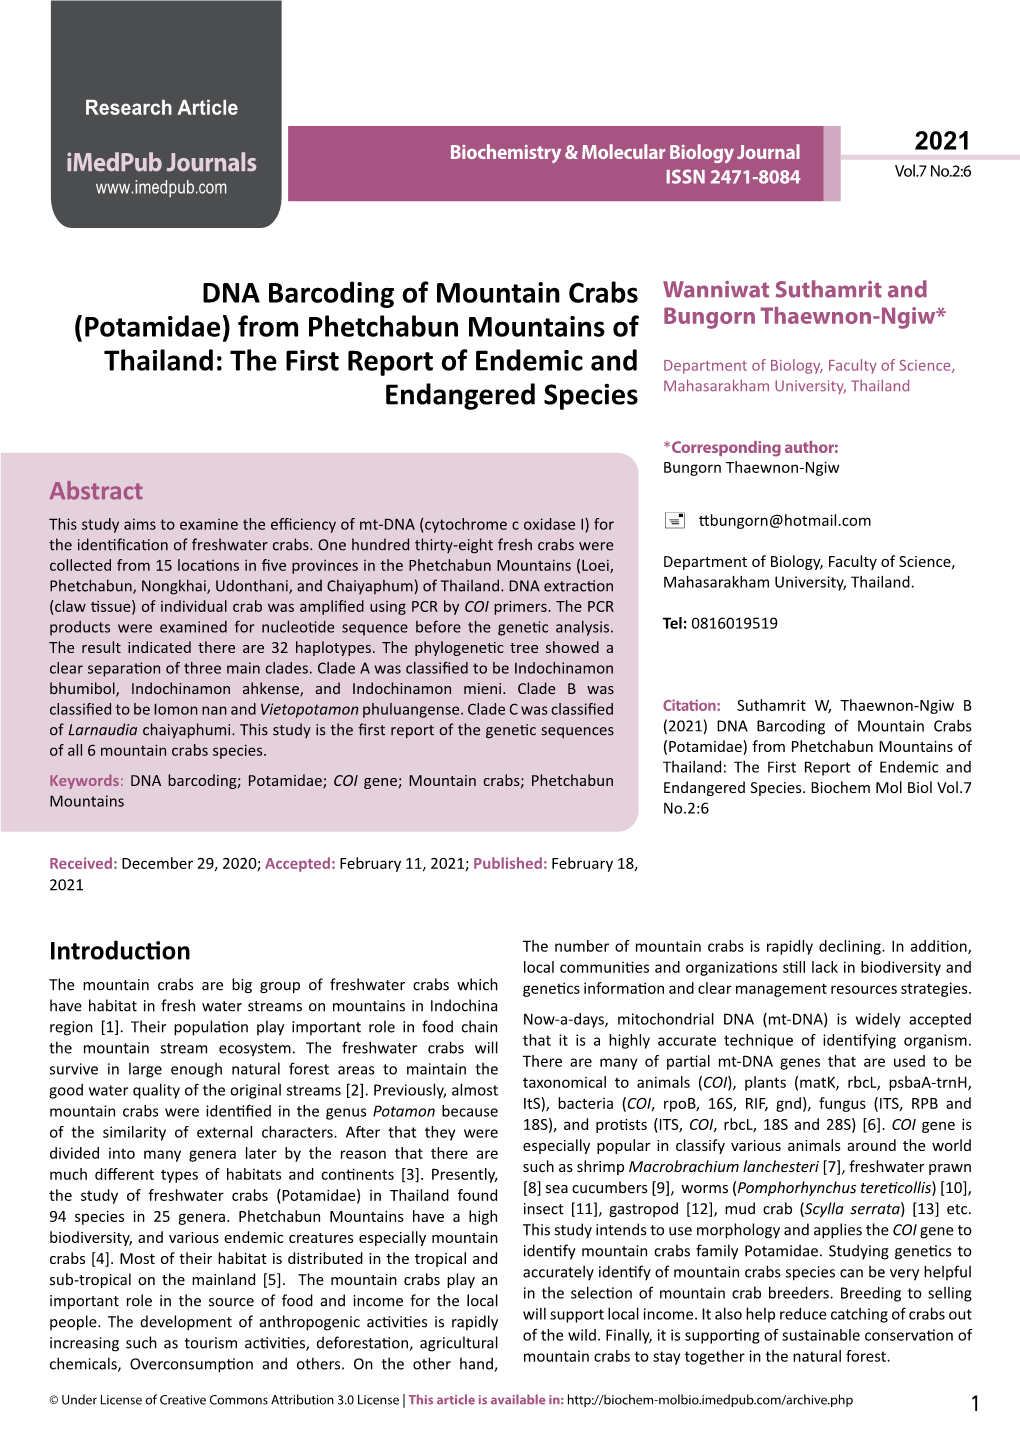 DNA Barcoding of Mountain Crabs (Potamidae) from Phetchabun